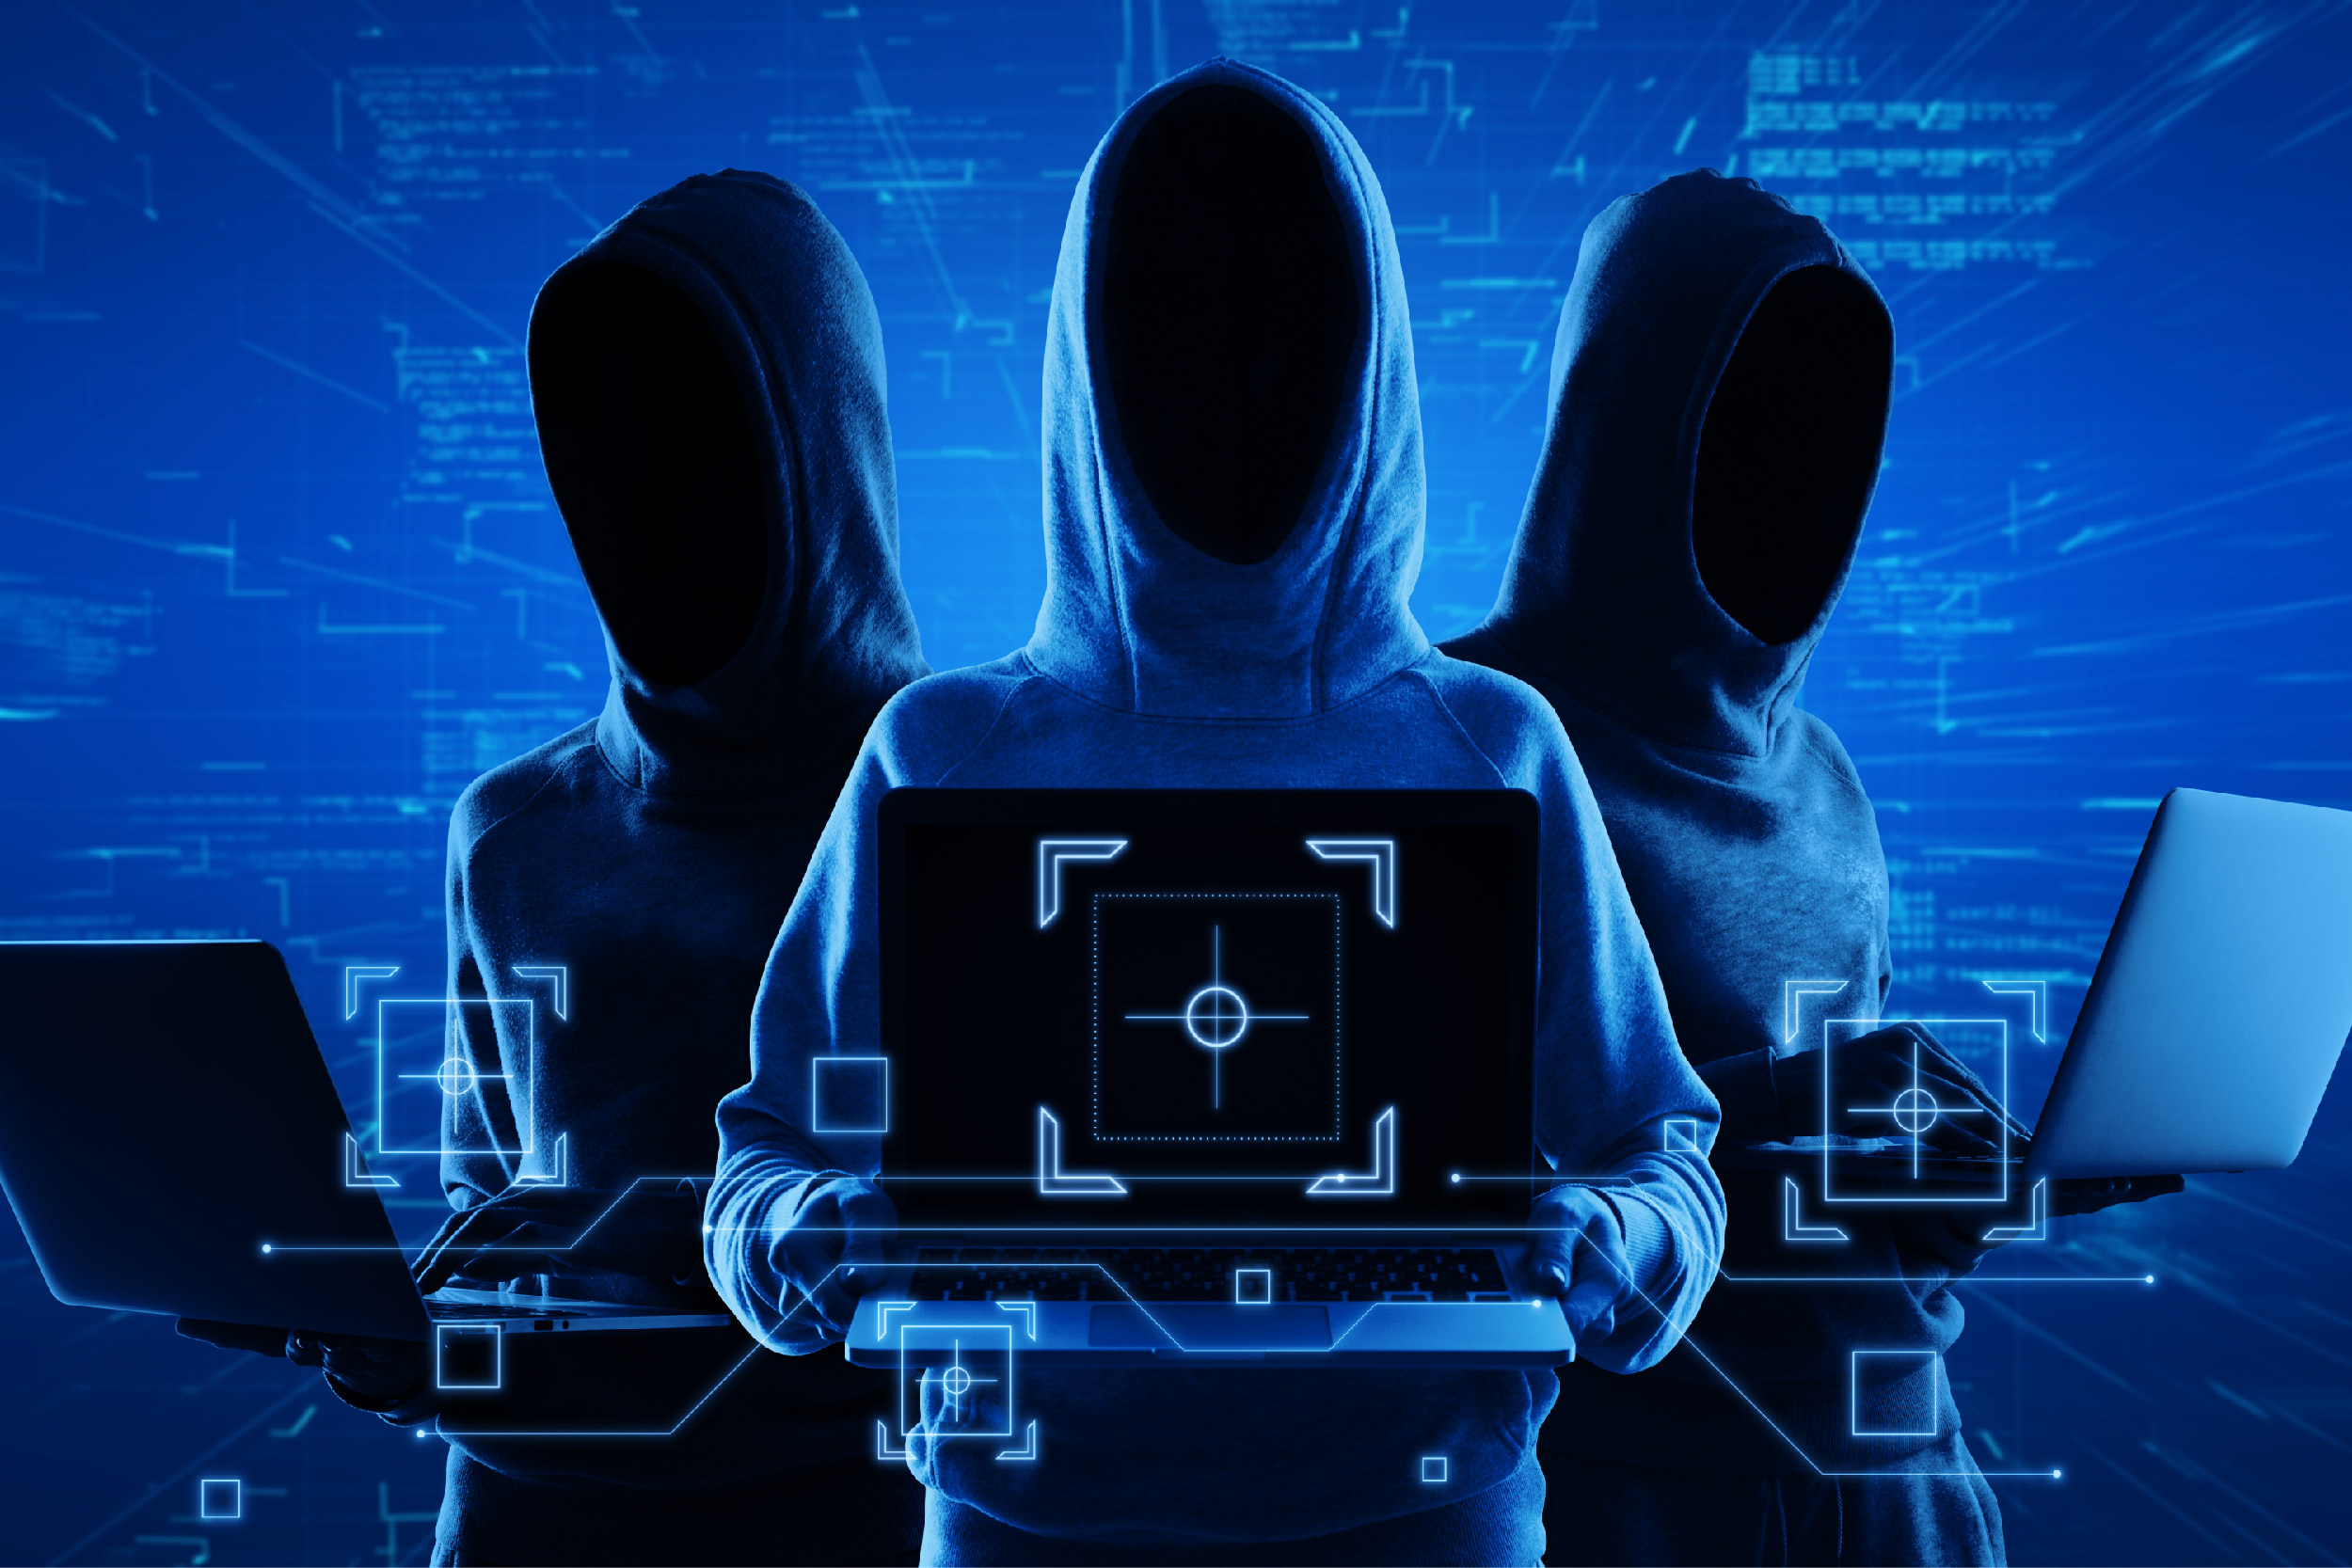 Malware analysis chess.com Malicious activity